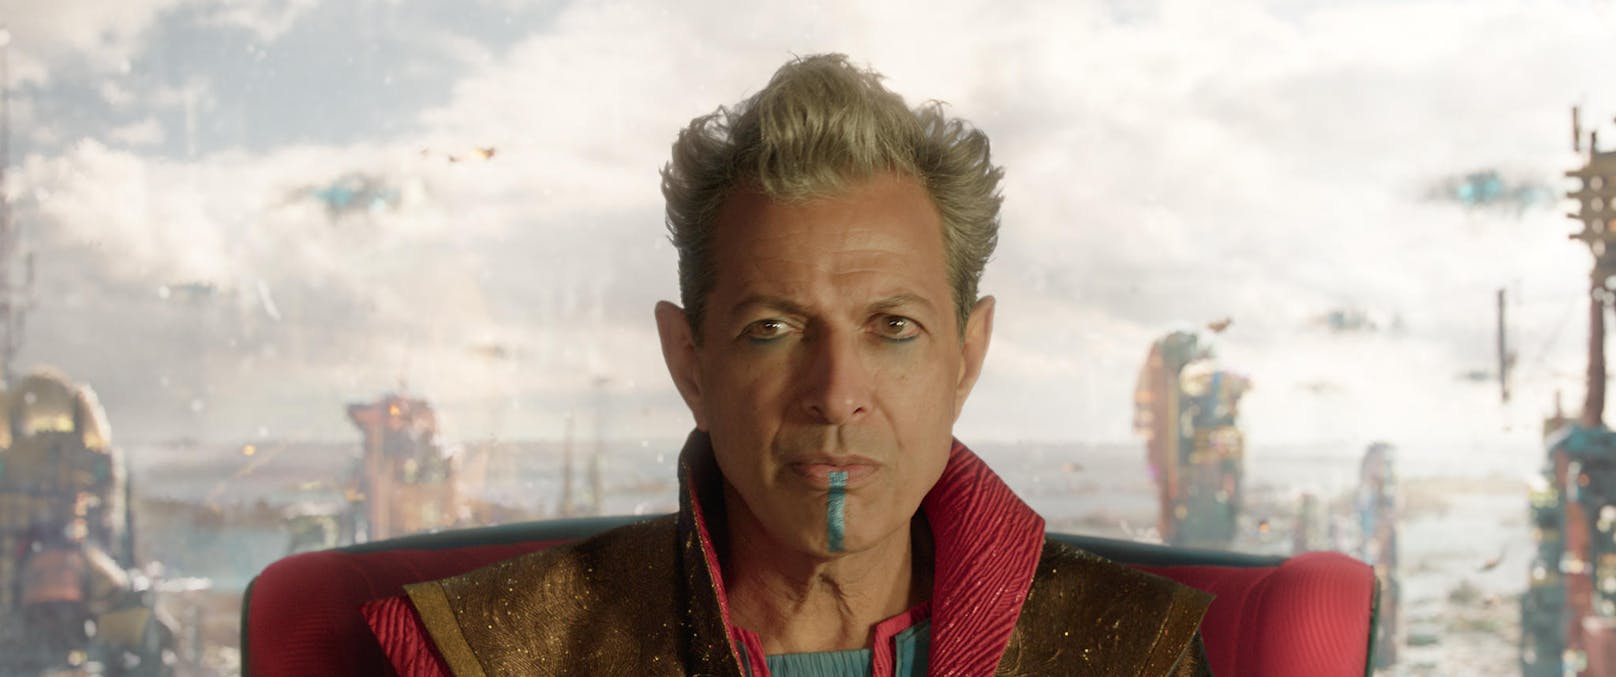 Jeff Goldblum als Grandmaster in "Thor: Ragnarok"